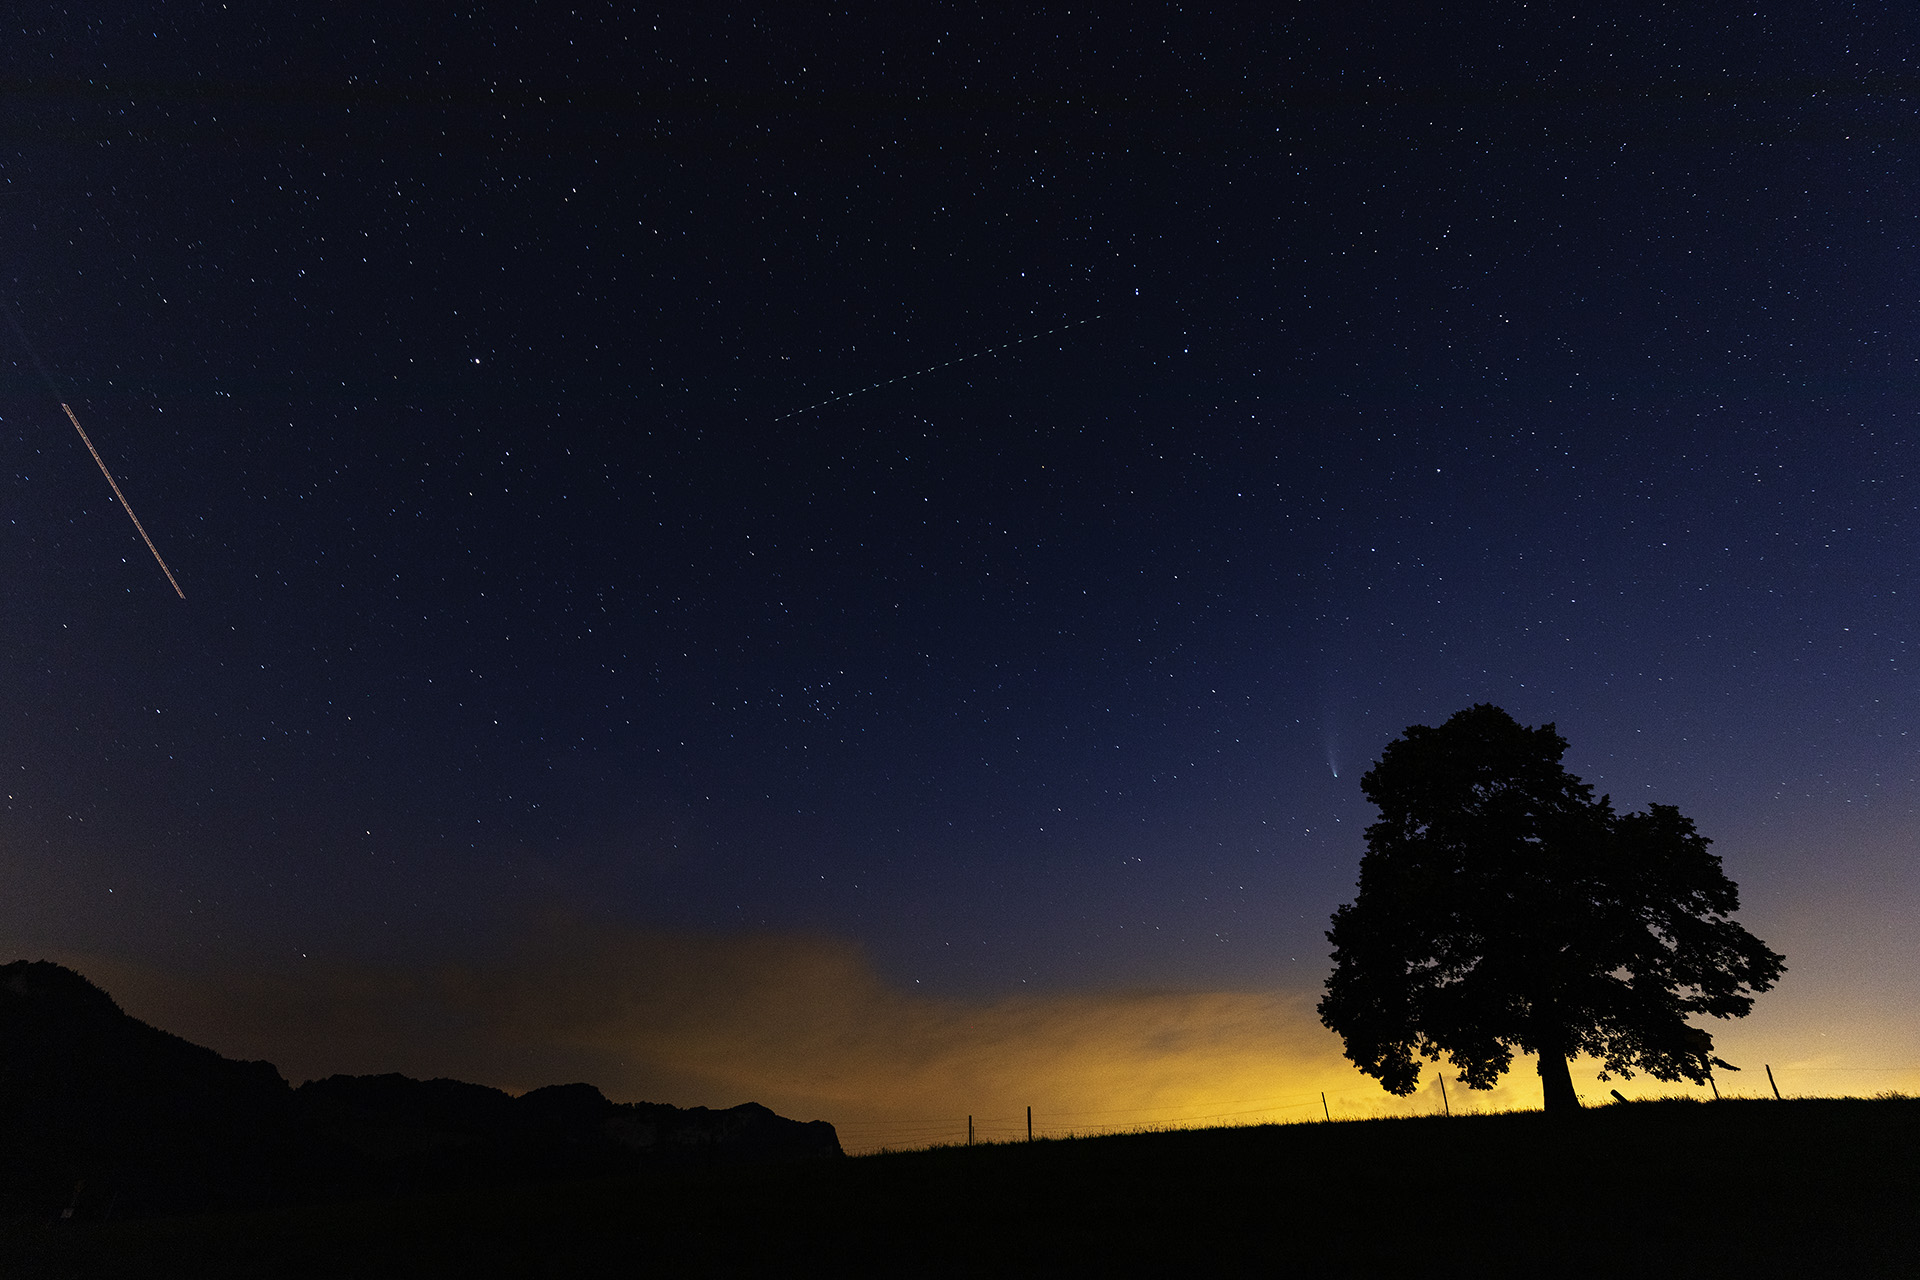 Comet C/2020 F3, Neowise, next to Linden tree silhouette, Challhöchi, Basel-Landschaft, Switzerland